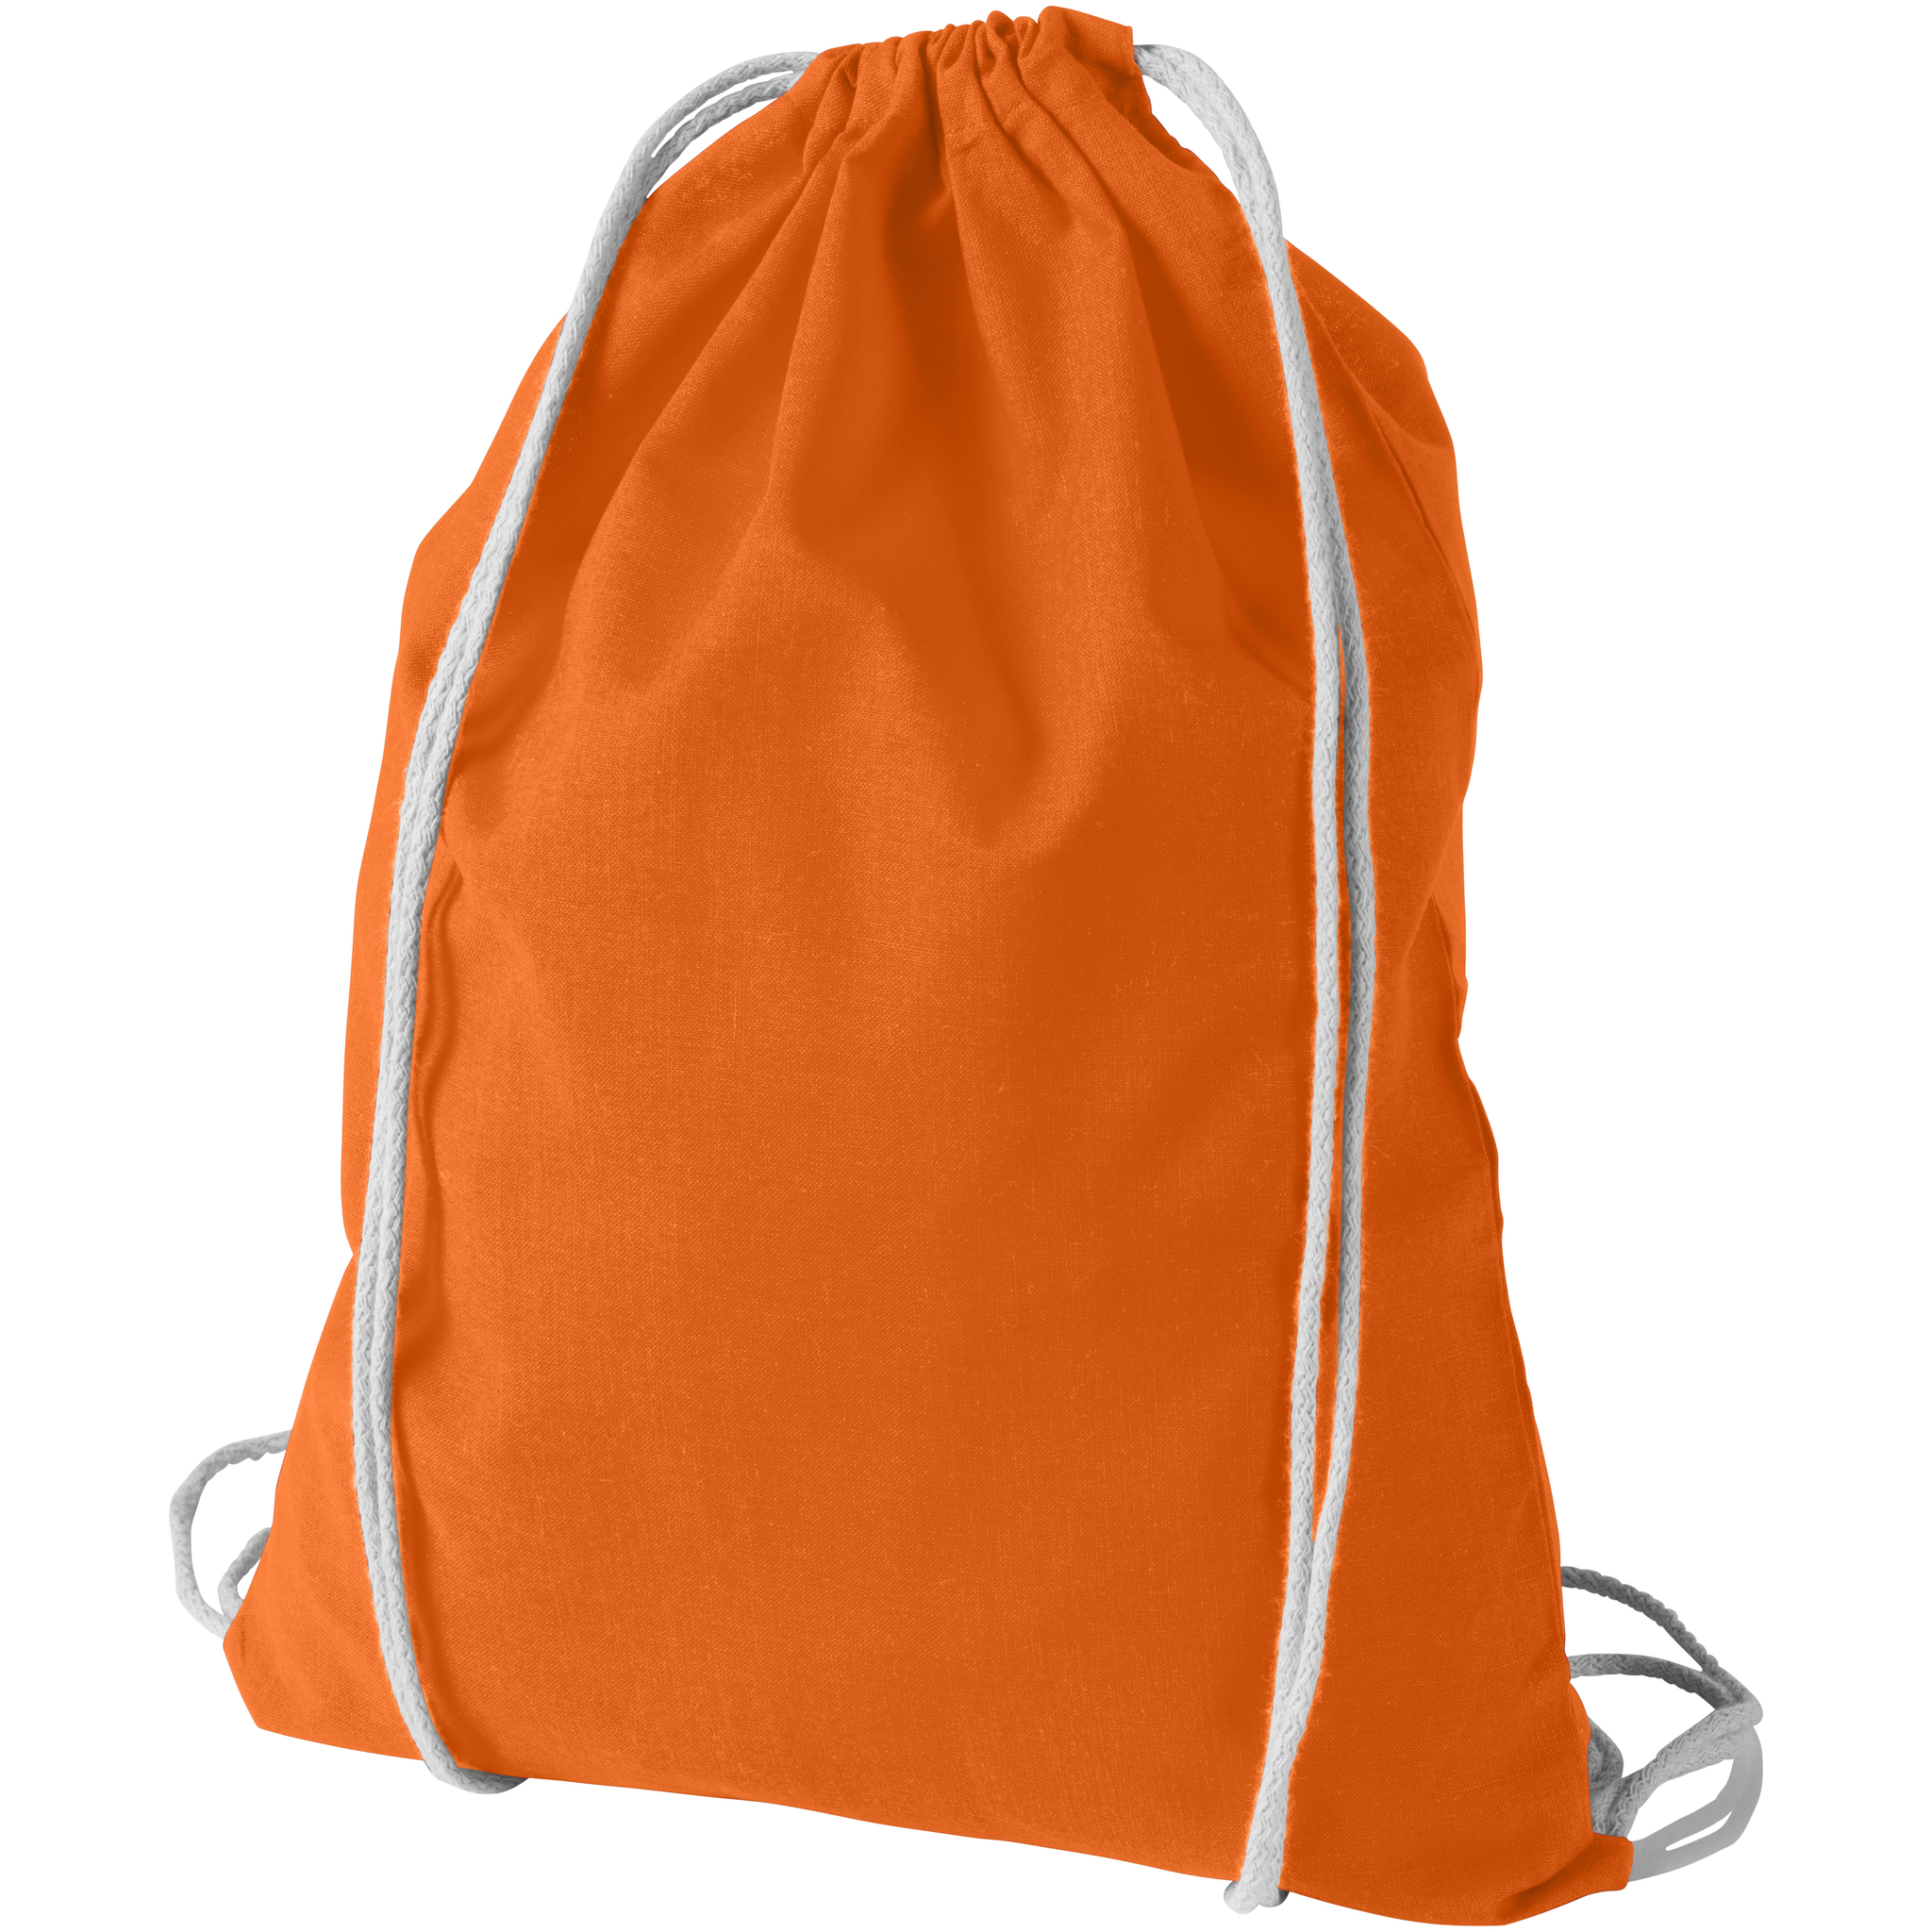 Mochila De Algodón De Cordones Modelo Oregon (paquete De 2) Bullet - naranja - 